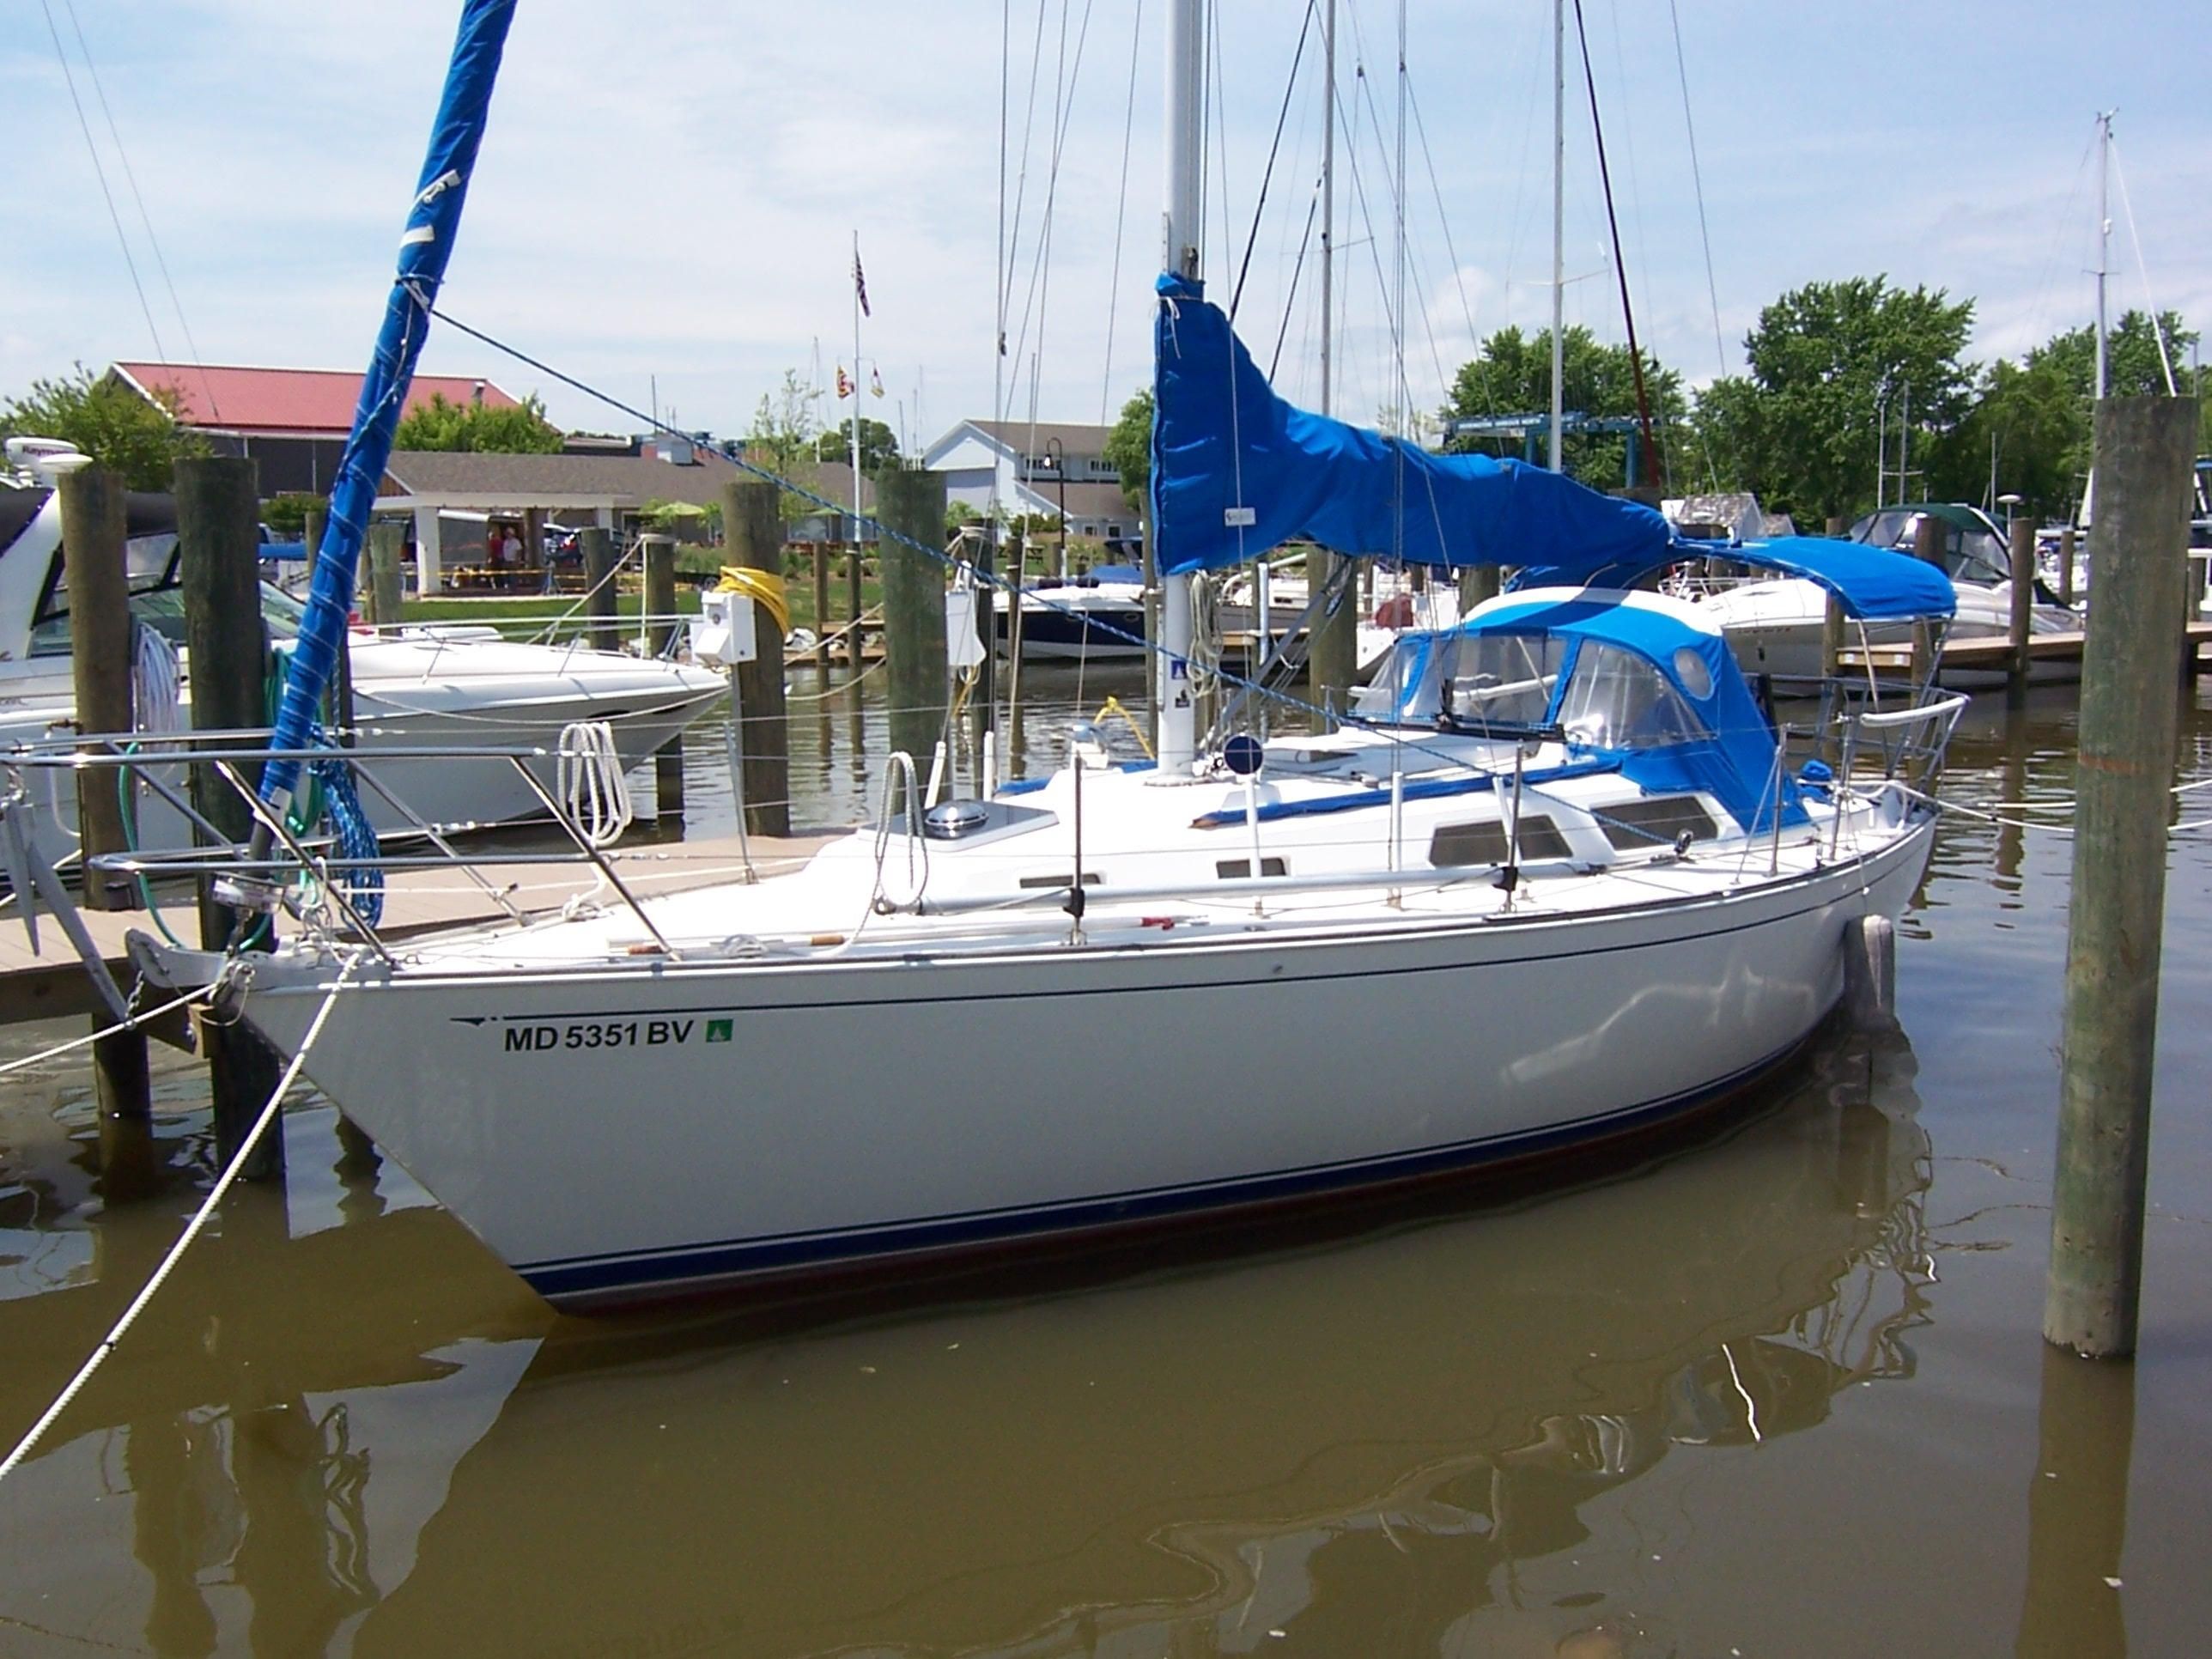 sabre 30 sailboat for sale